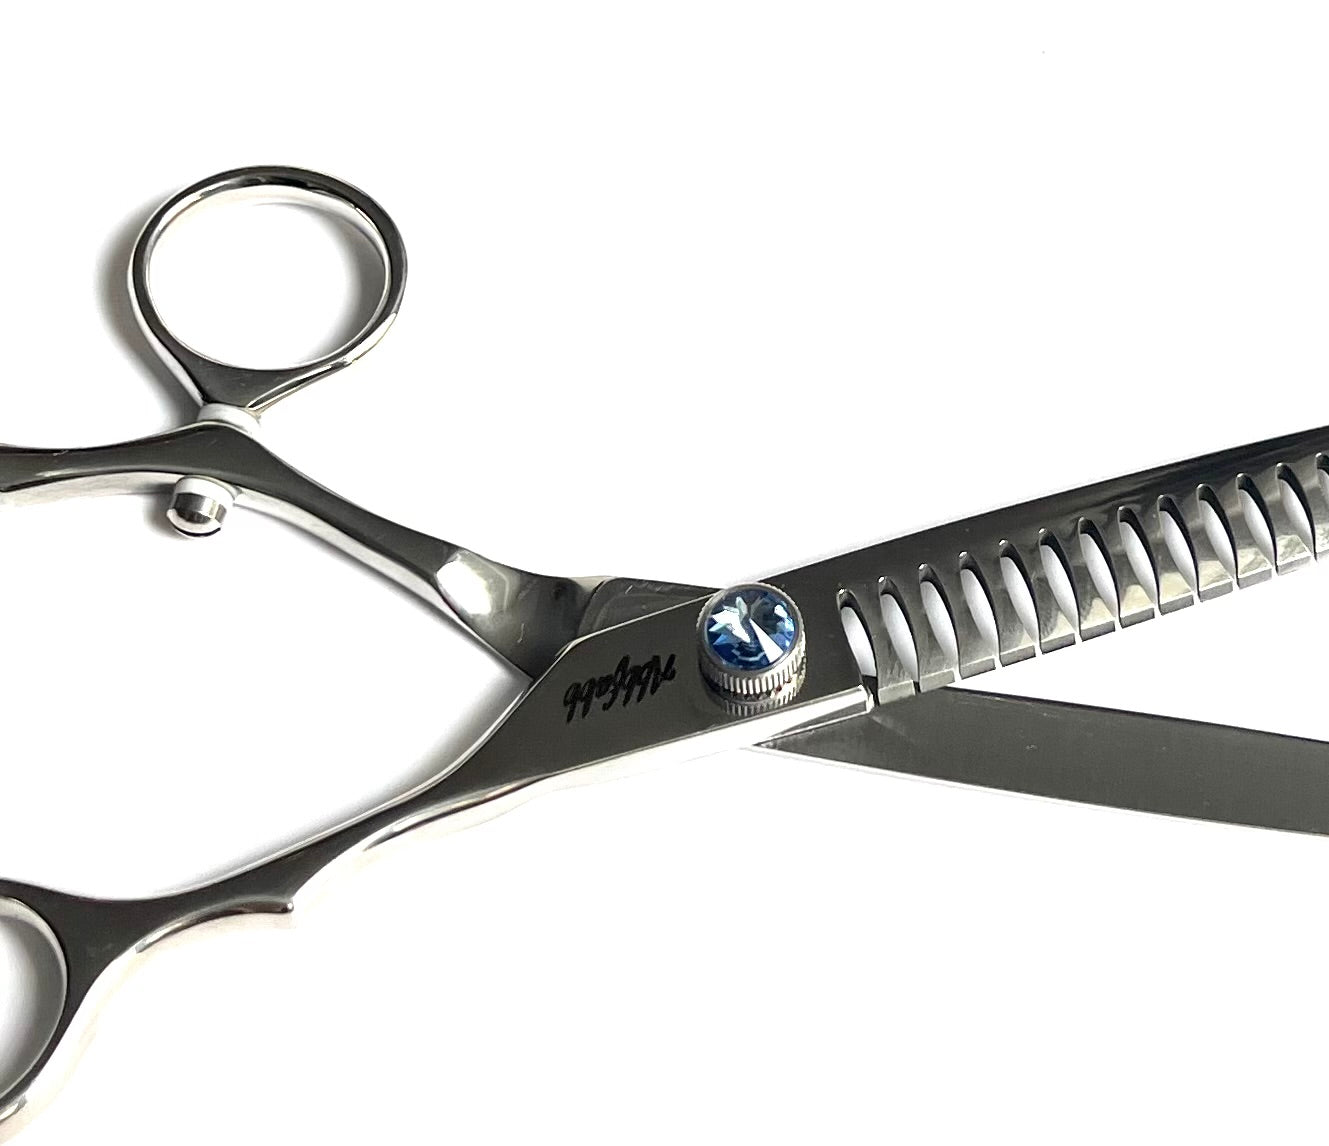 chunker for dog grooming-dog grooming chunkers-texturising scissors for dog grooming-swivel handle